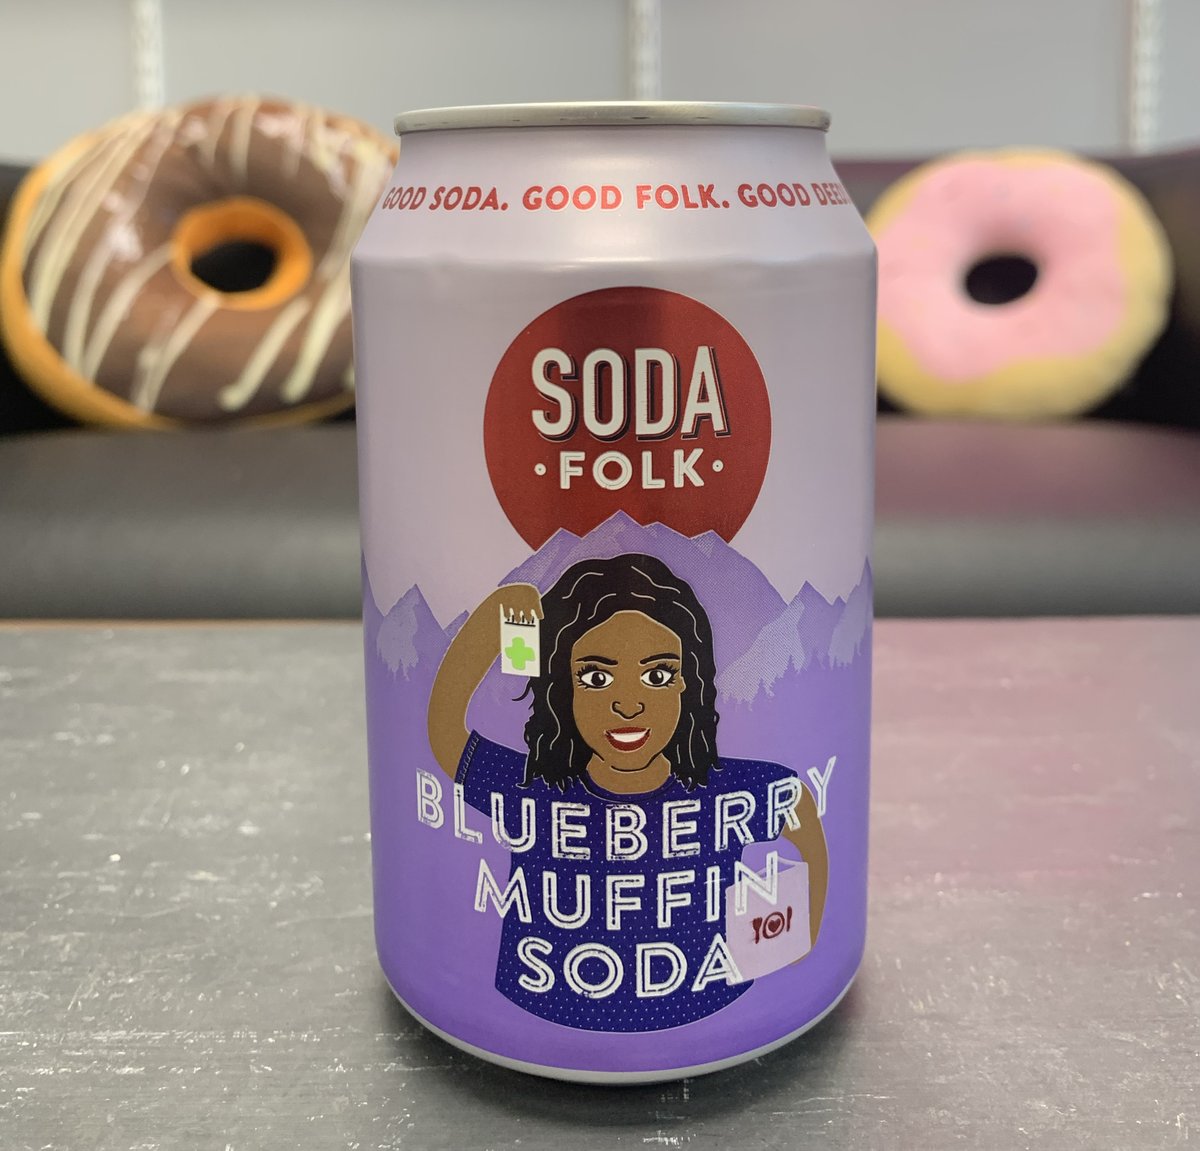 Have you tried @sodafolk we got ours from @ocado #blueberrymuffinsoda #deliciousdrinks #indulgeintreats #sodafolk #drink #drinkreview #fmcg